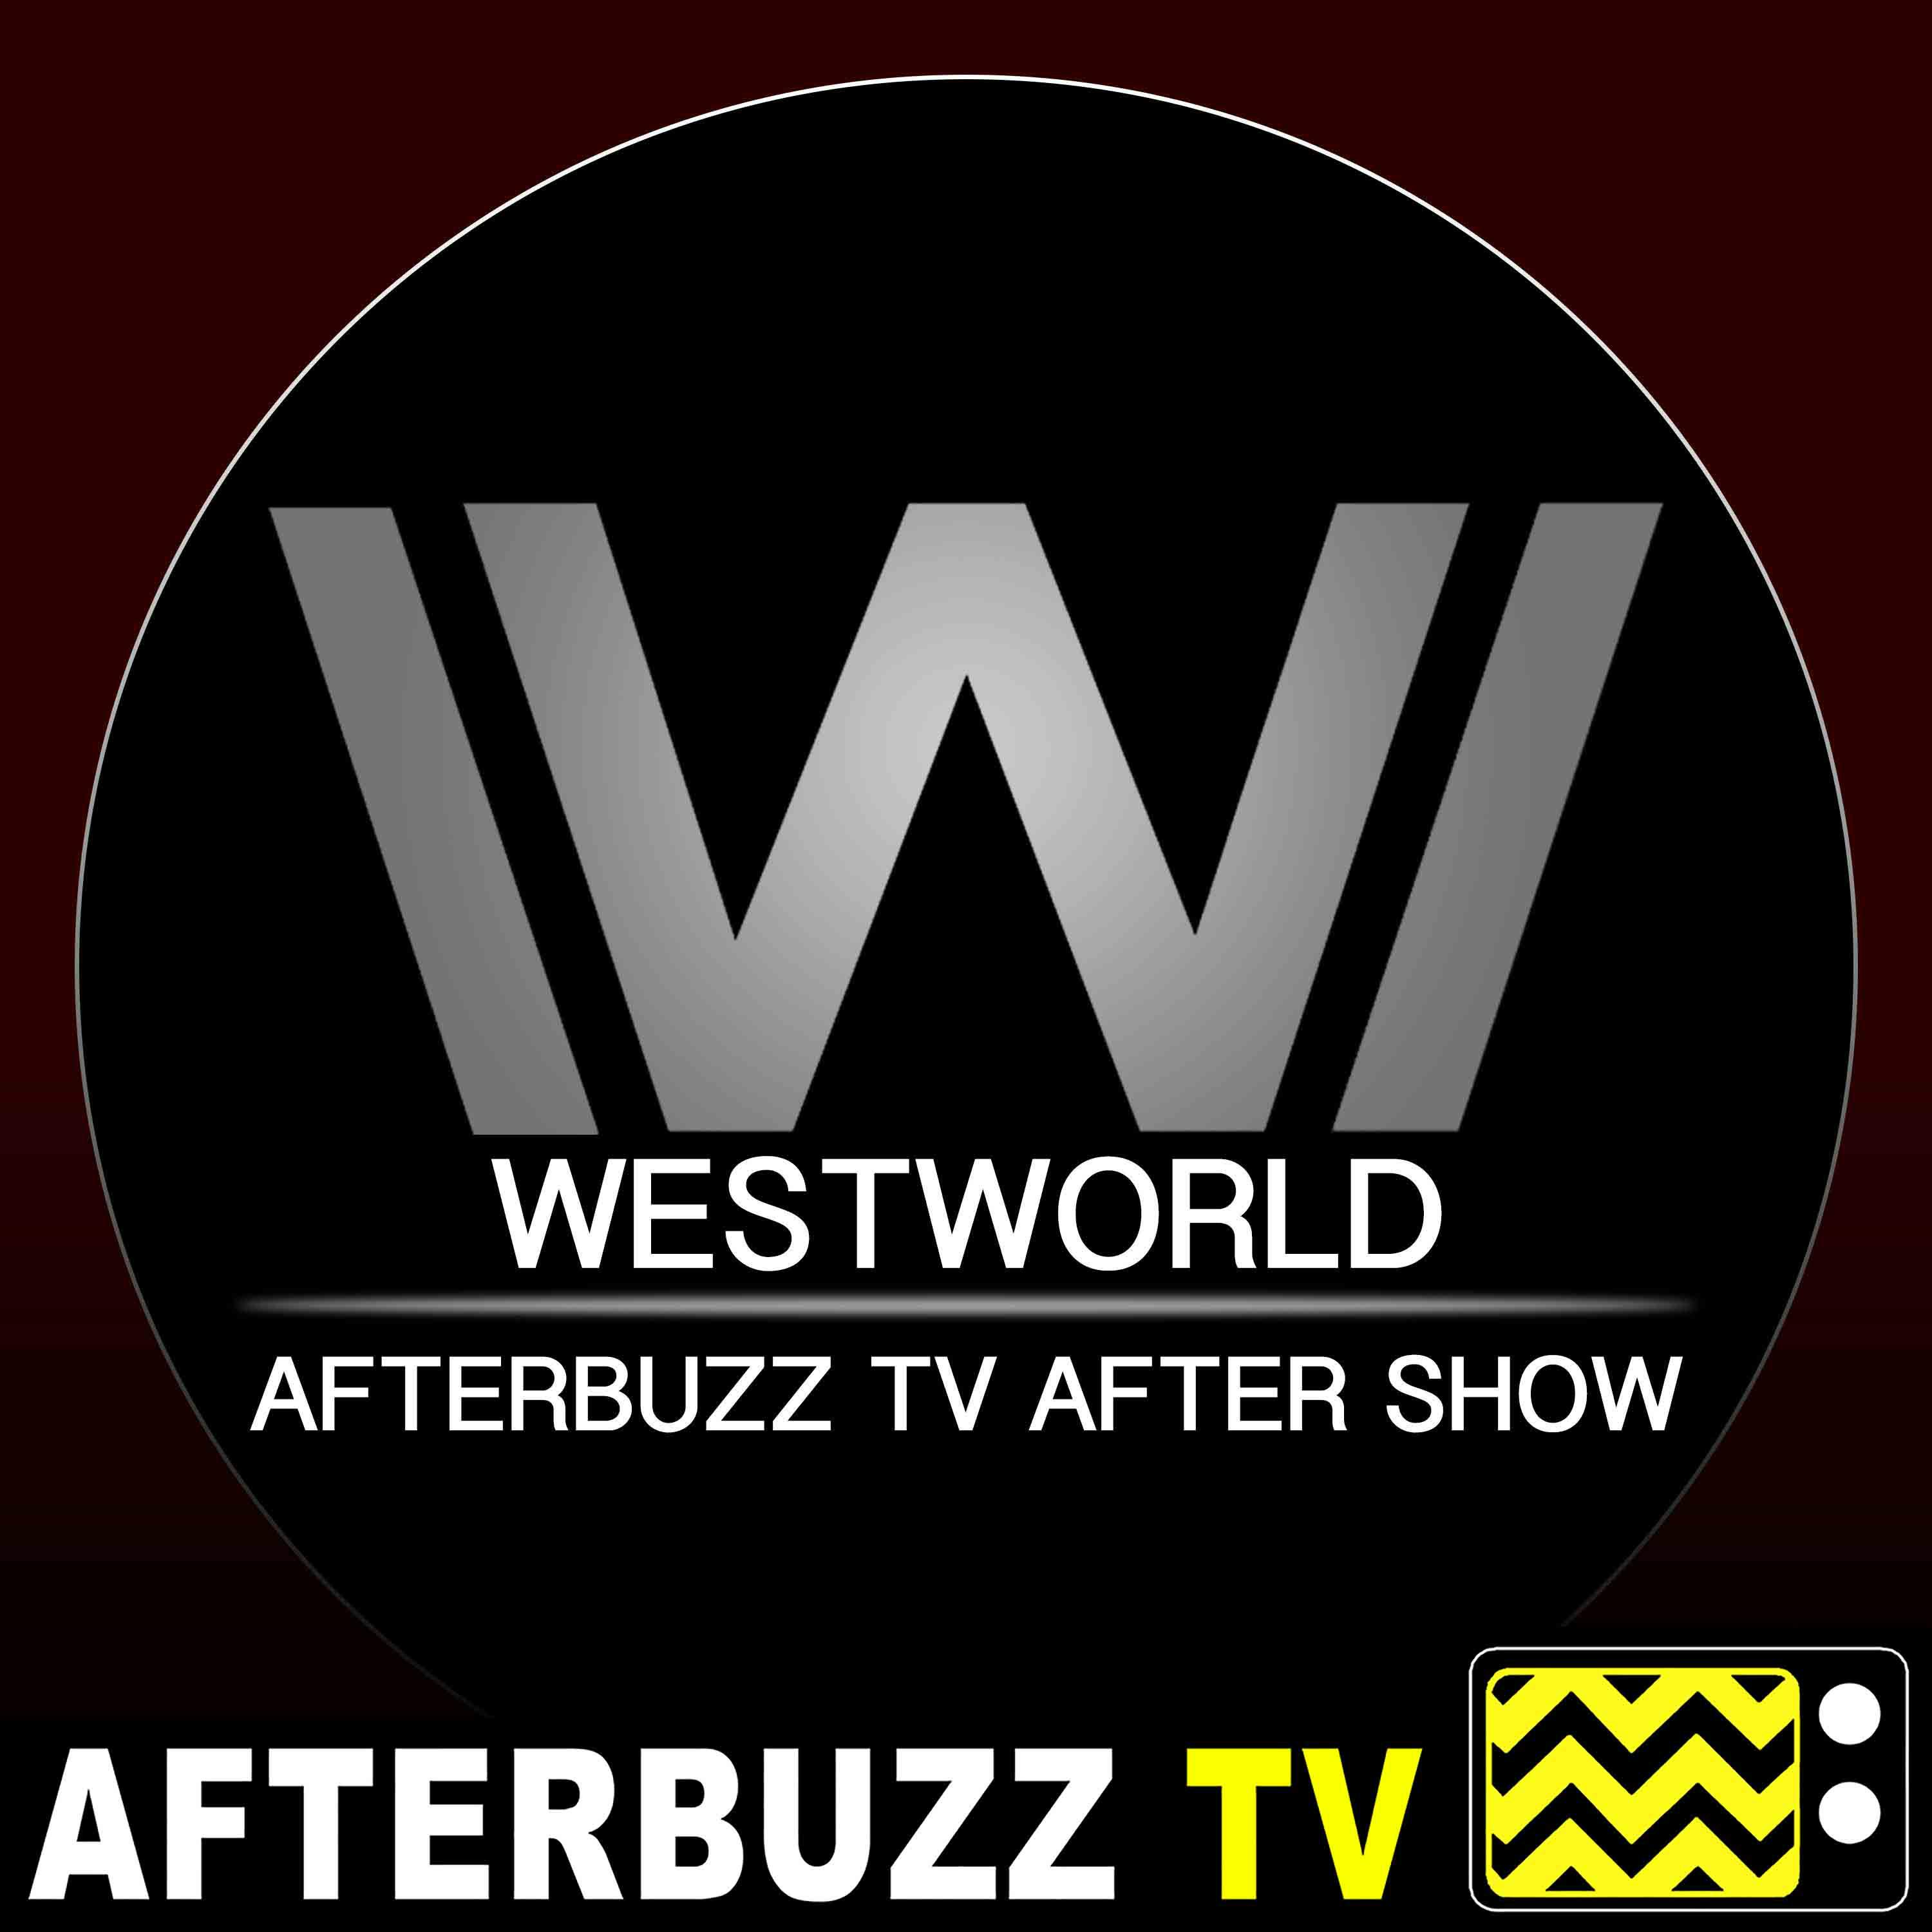 S3 E1 'Westworld' Review